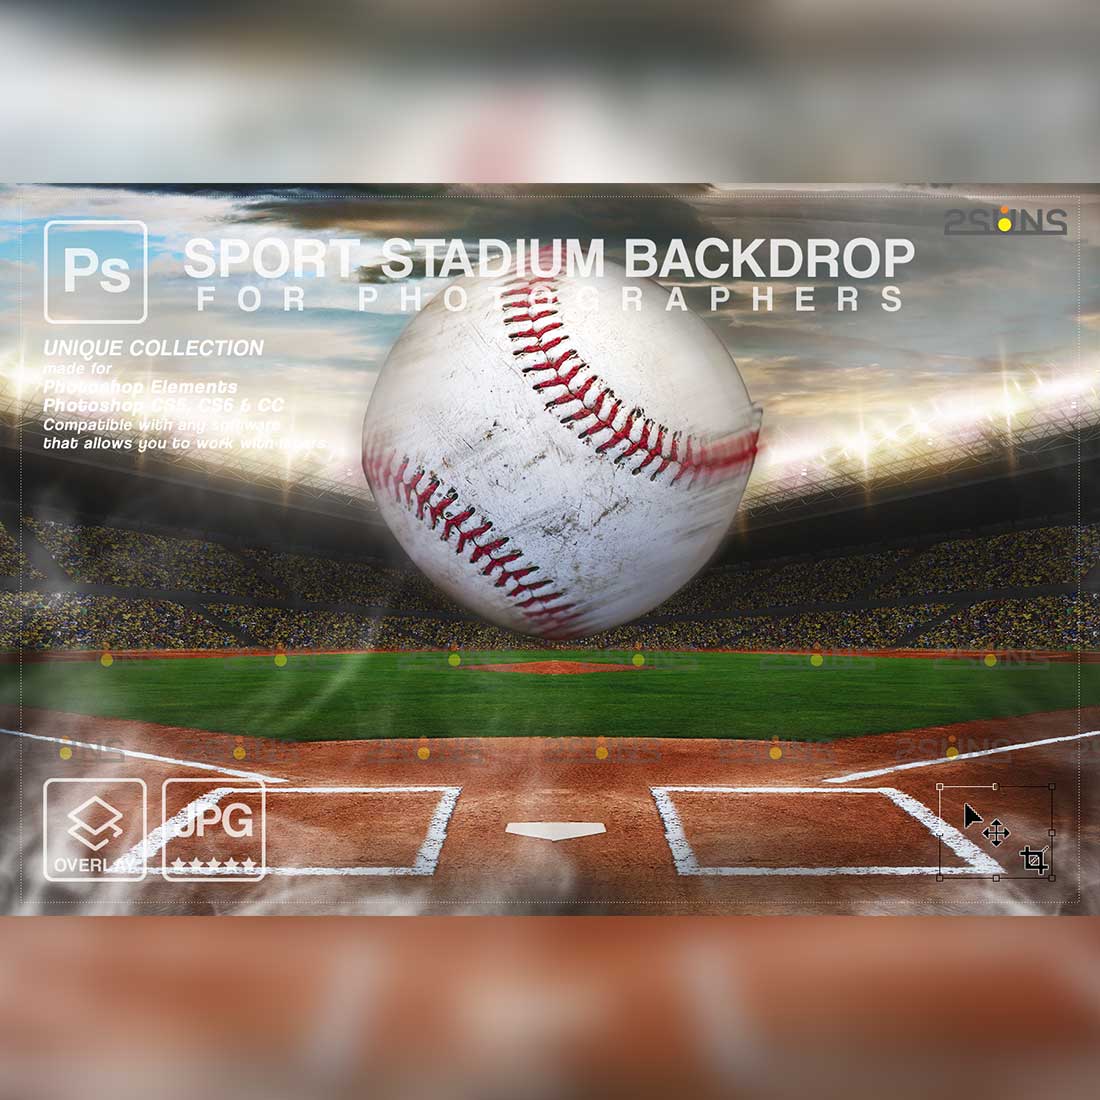 Sports Baseball Backdrop Digital Photoshop Background Overlay Preview Image.